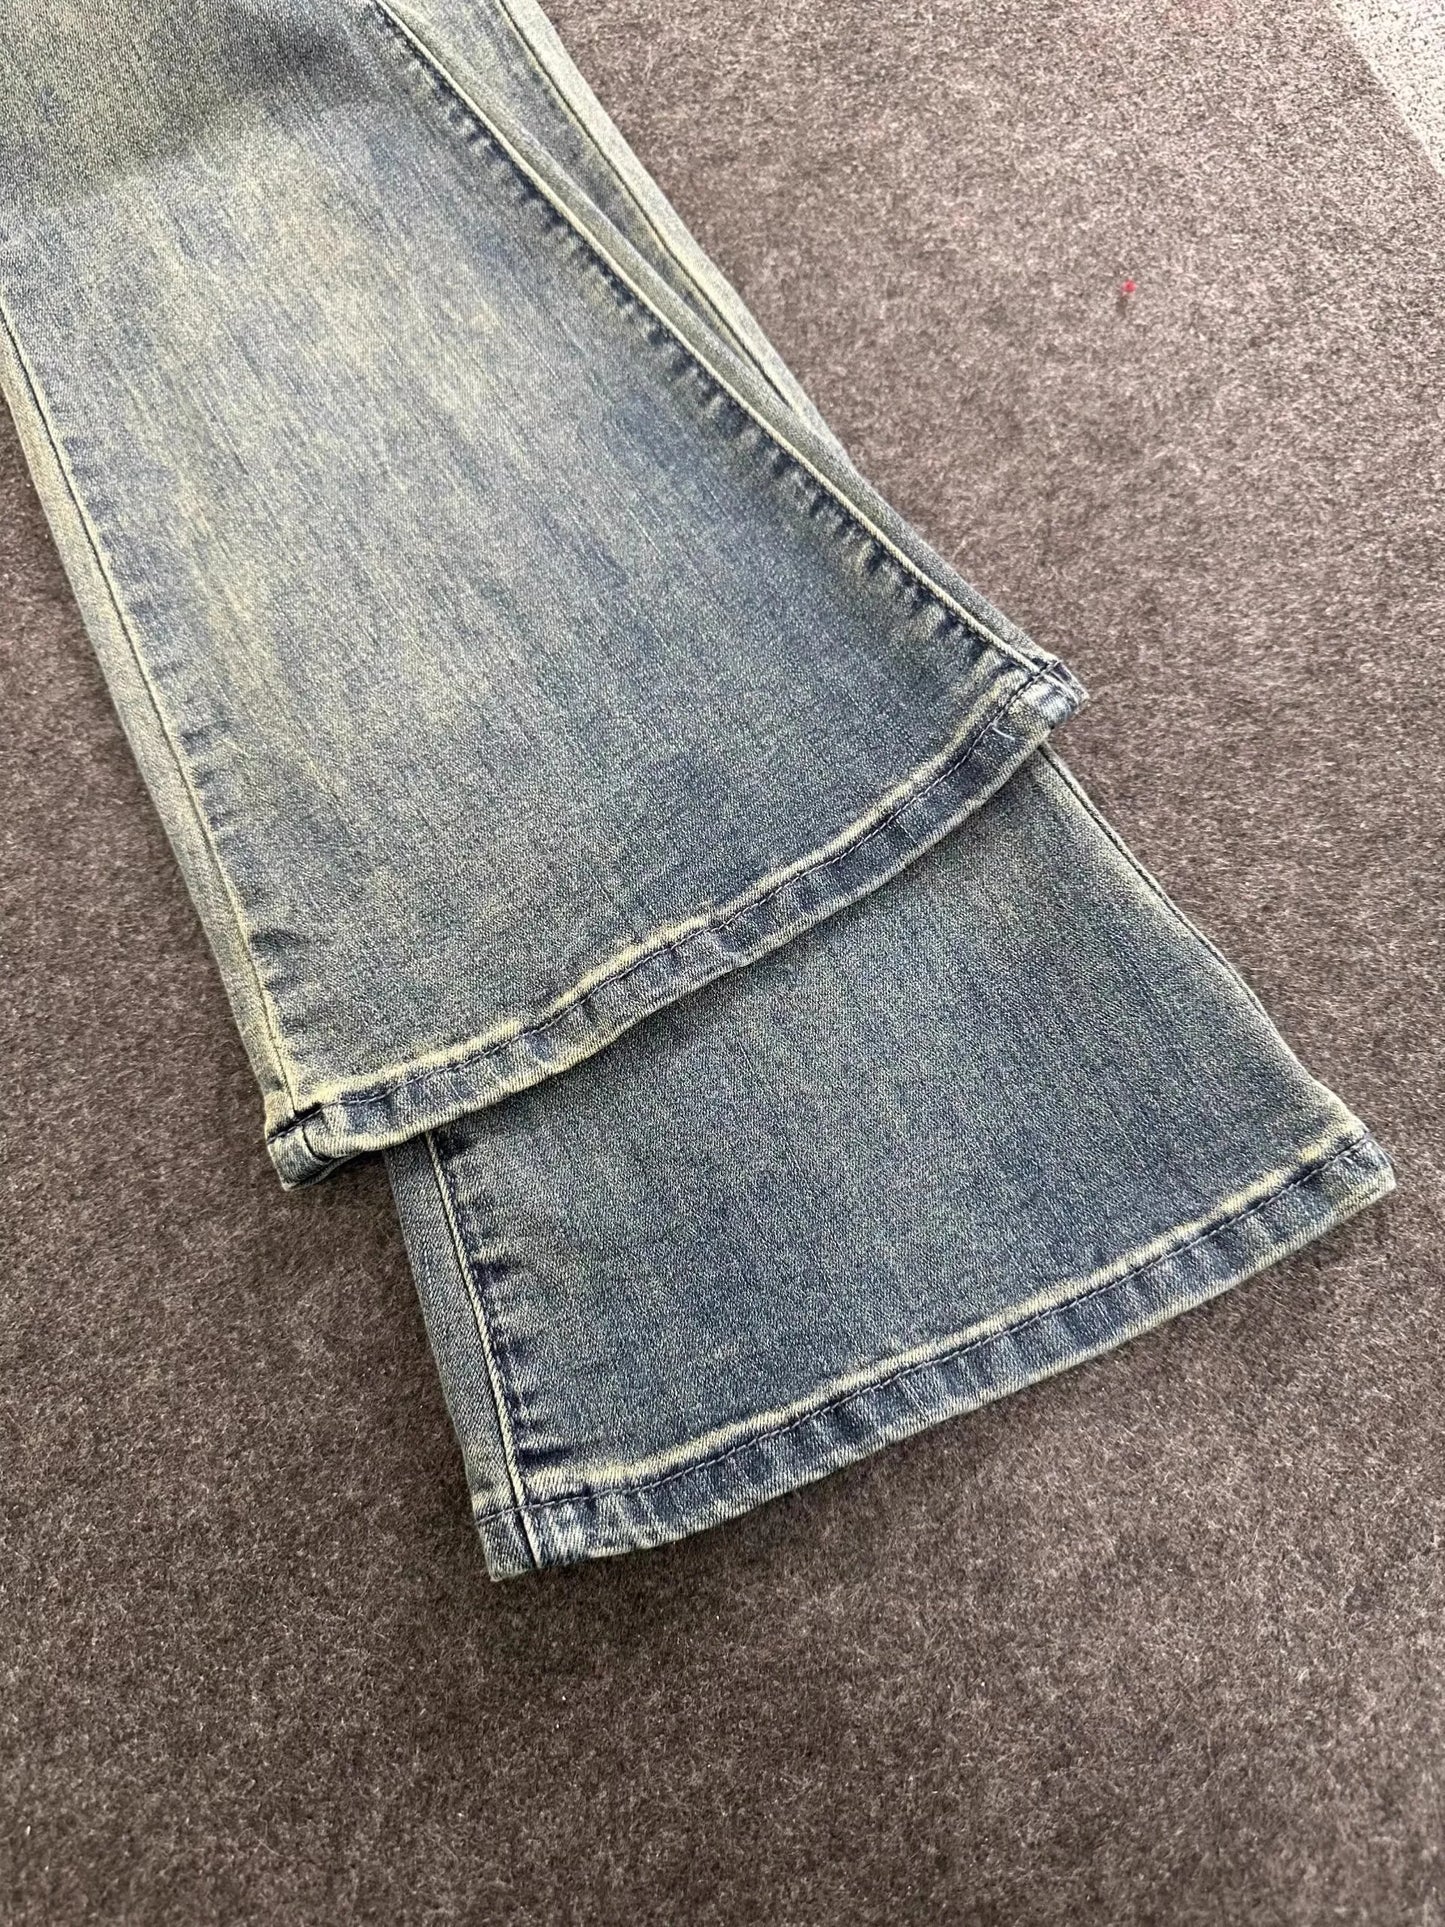 Western Spirit Medium / Light-Washed High-Rise Flared Jeans